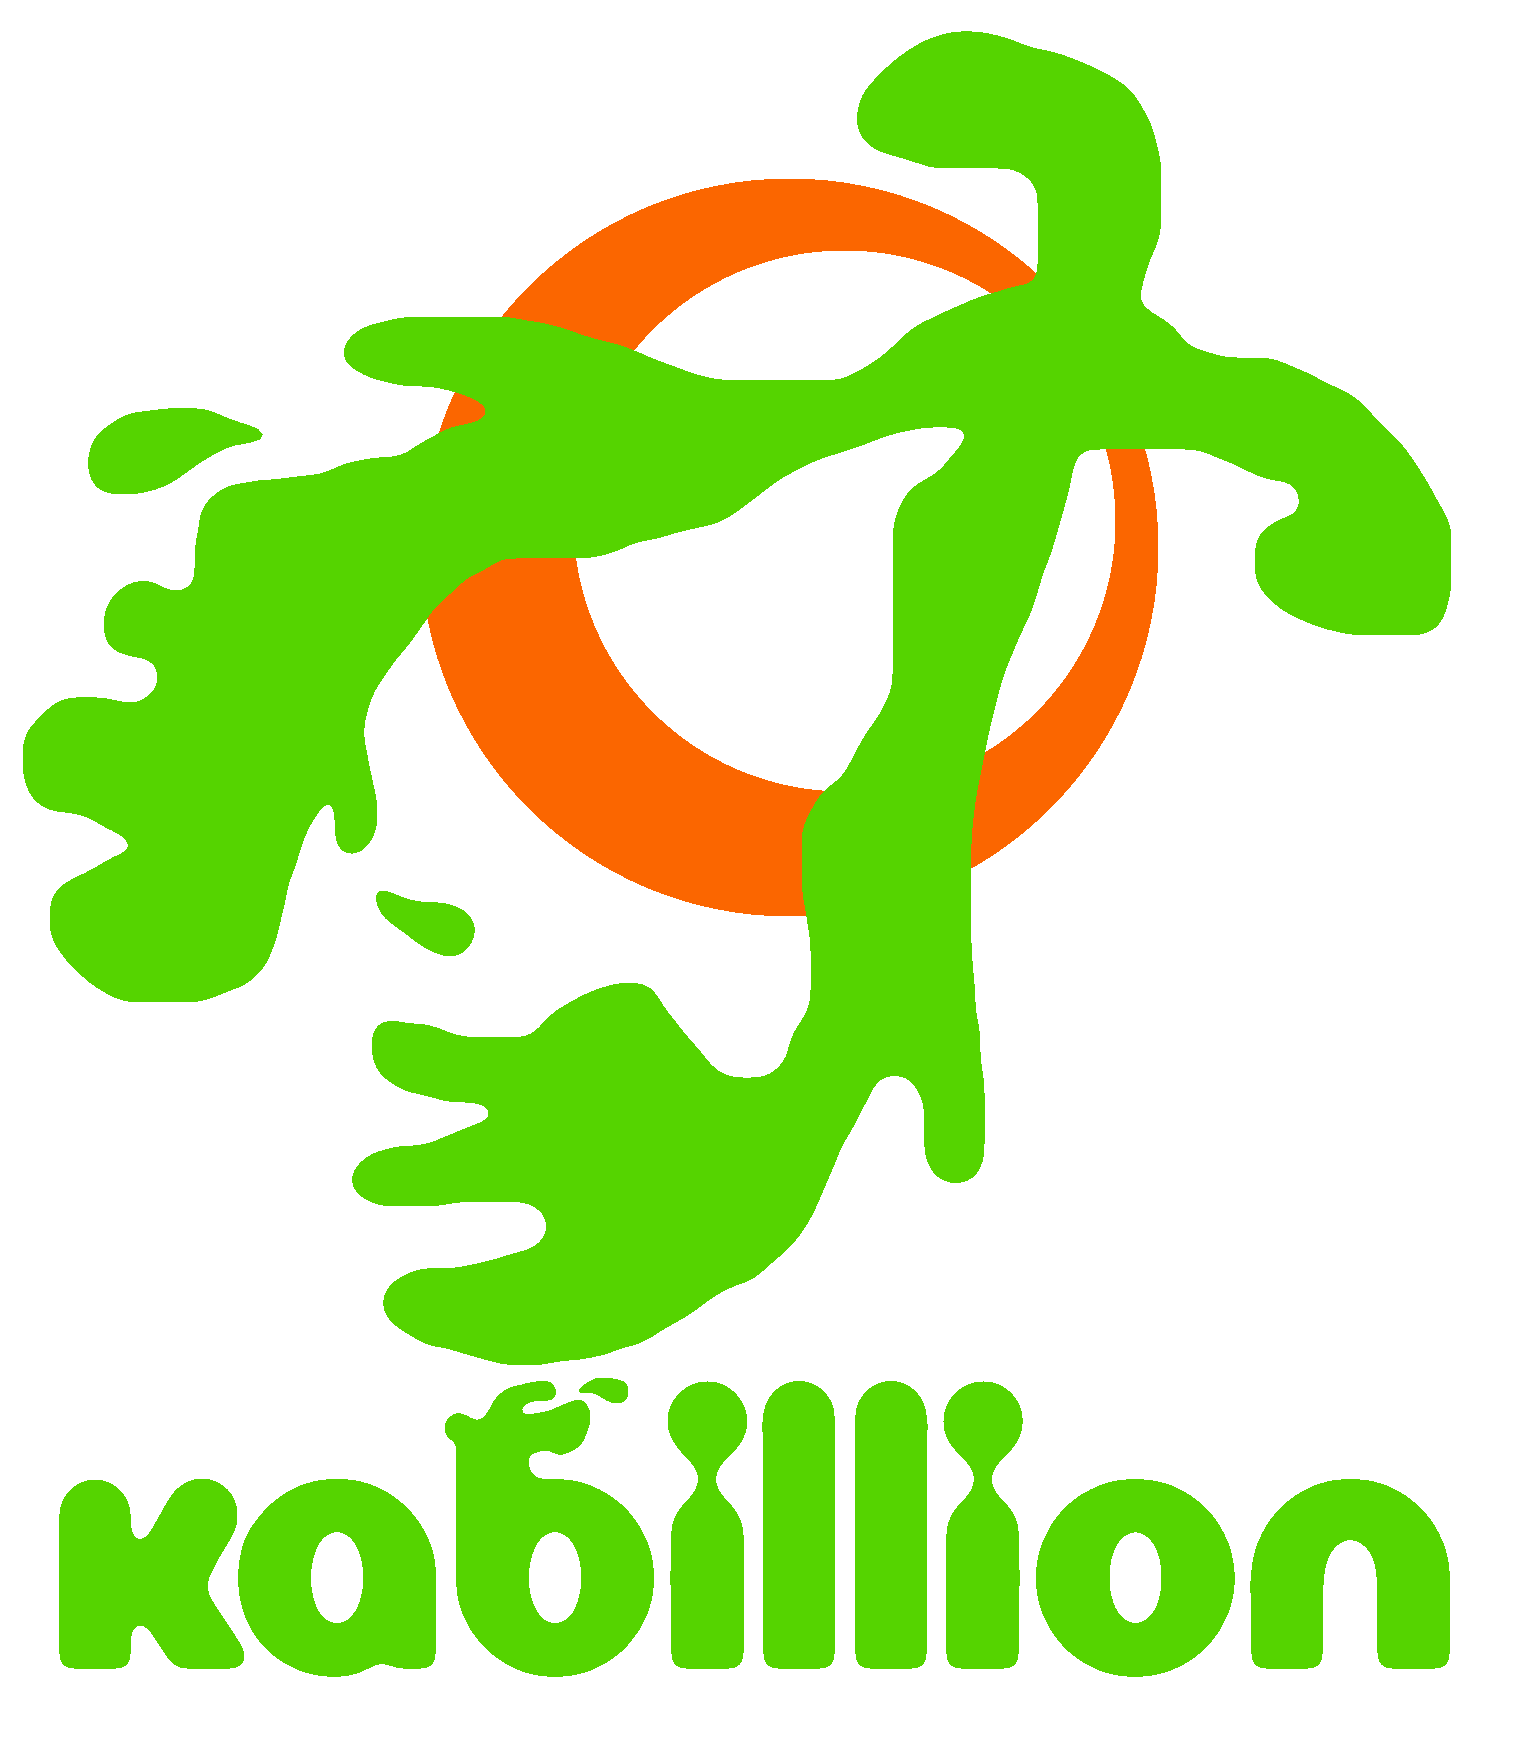 Nickelodeon Kabillion OTA kids channel logo.png